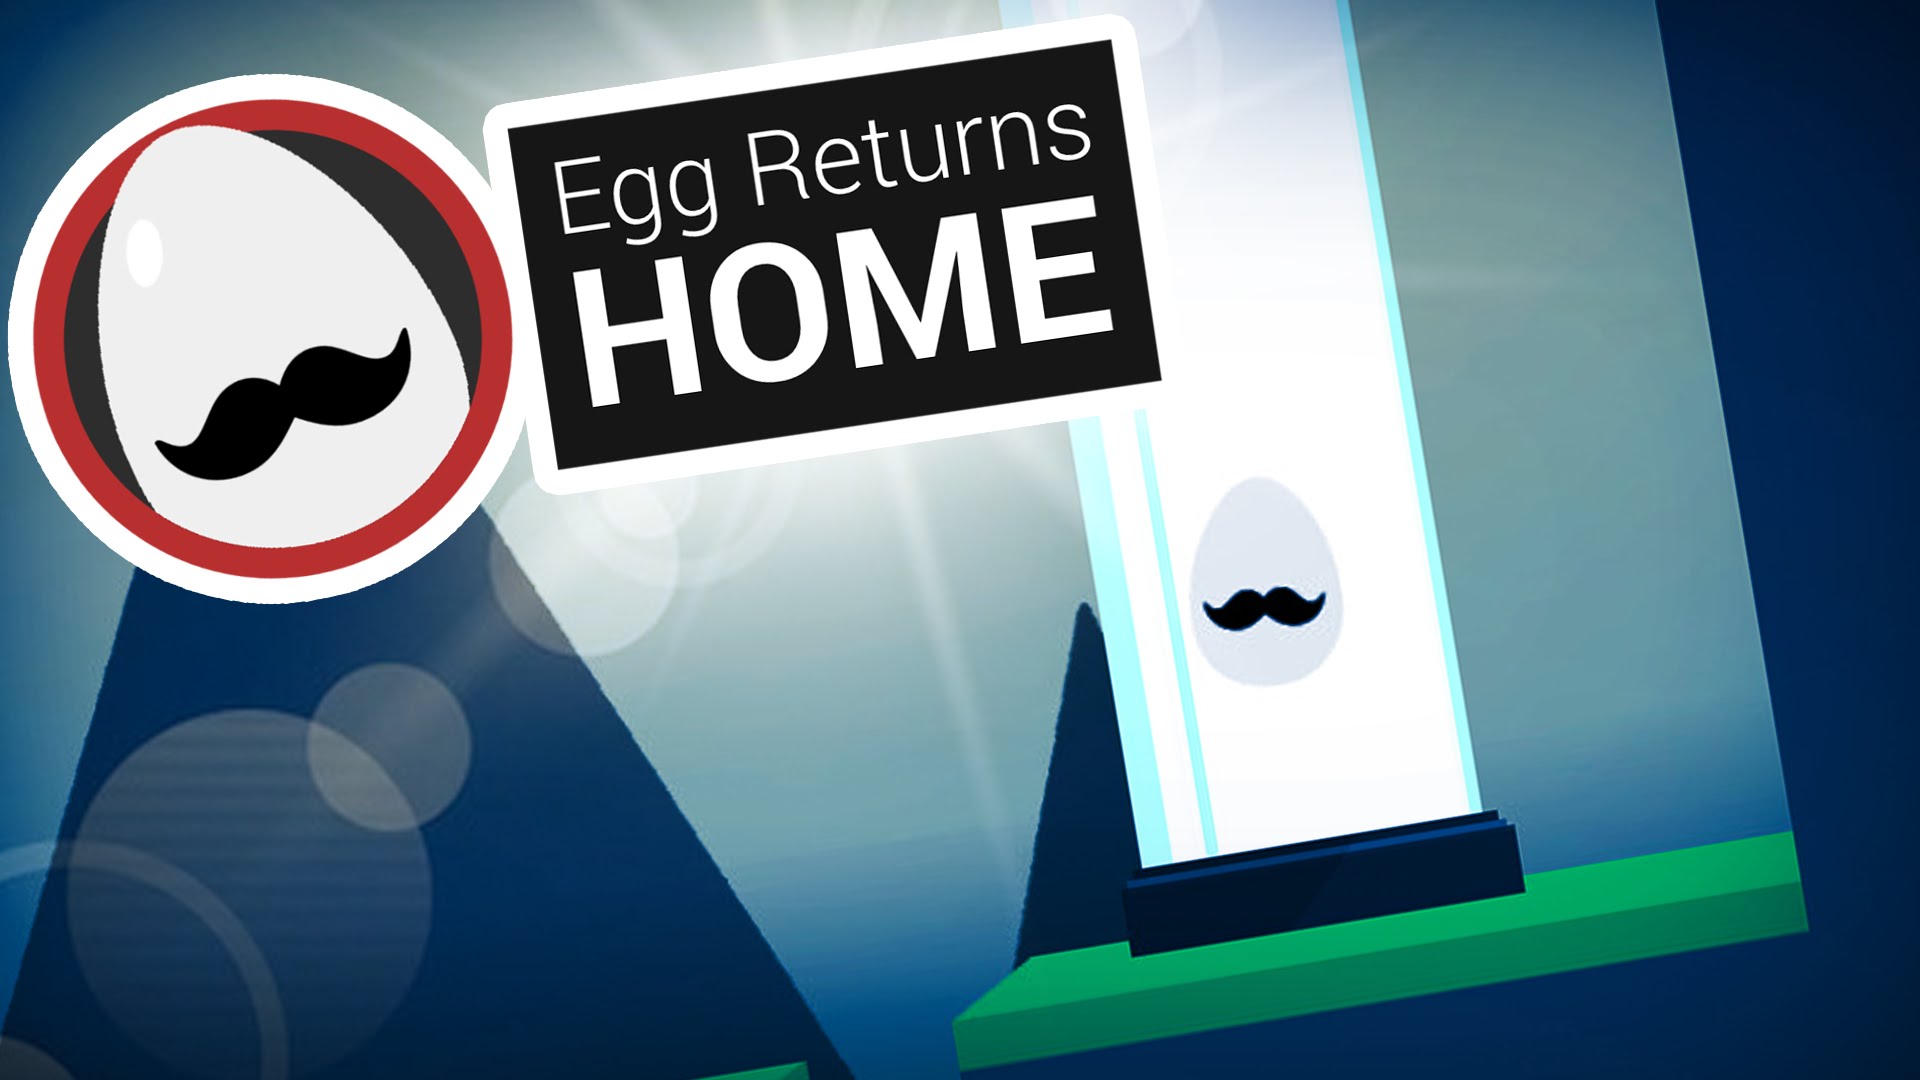 Egg Returns Home Backgrounds on Wallpapers Vista